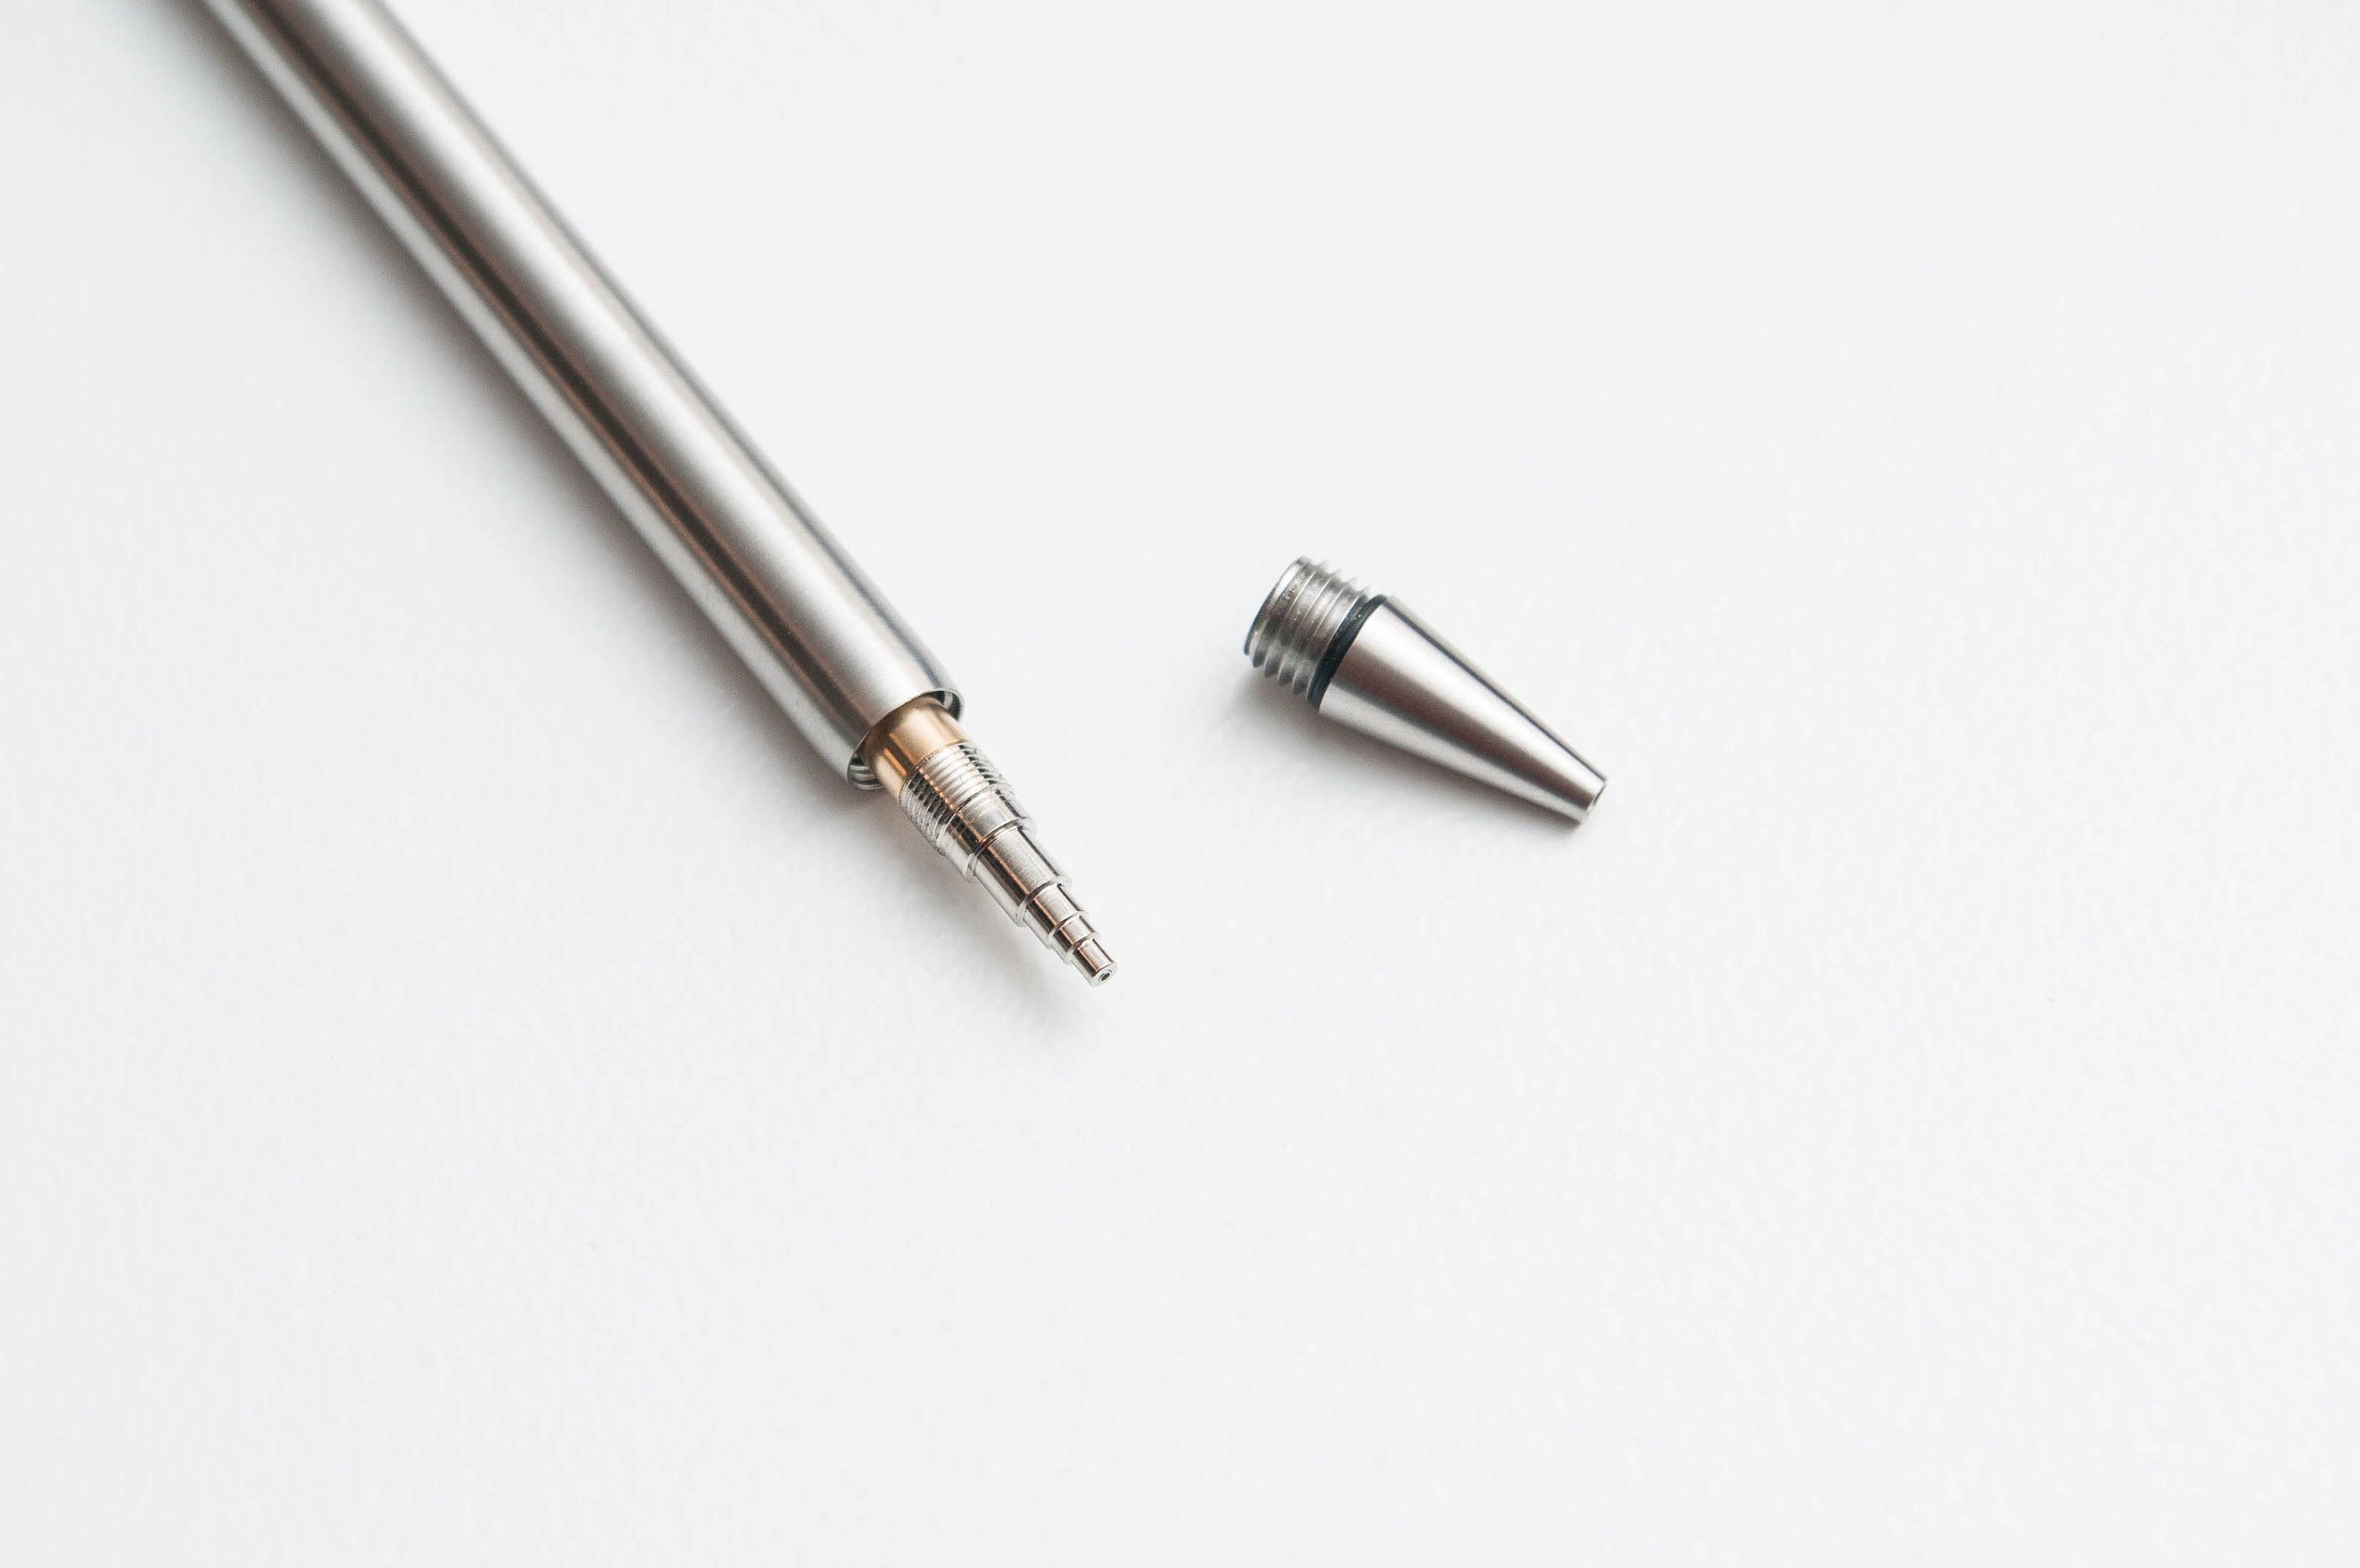 Pen + Pencil Set - Modern Fuel